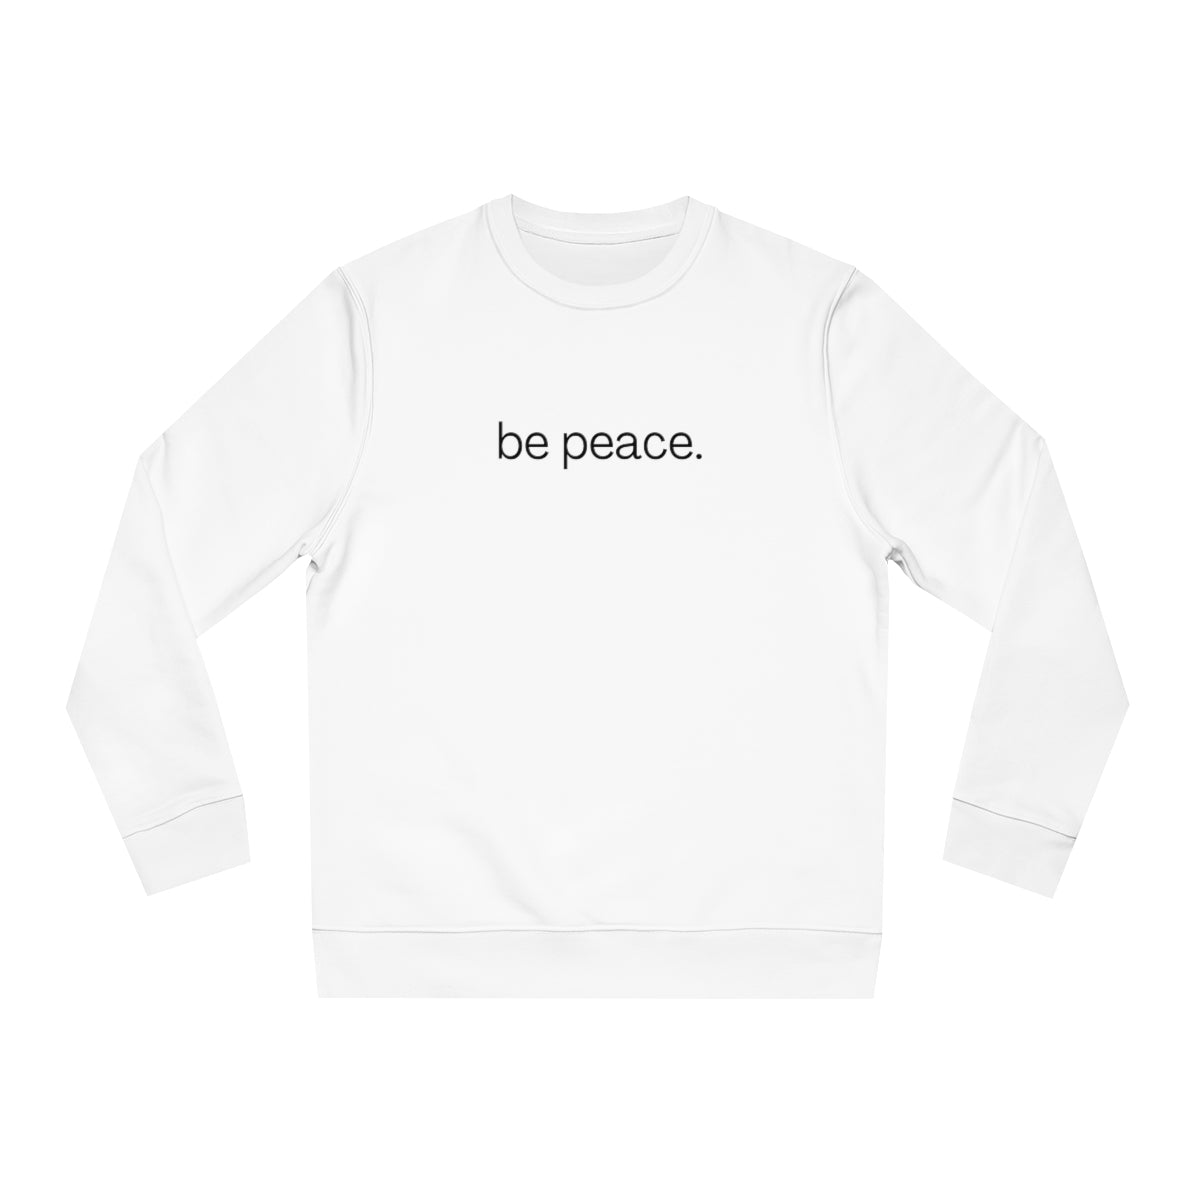 be peace. - Unisex Crewneck